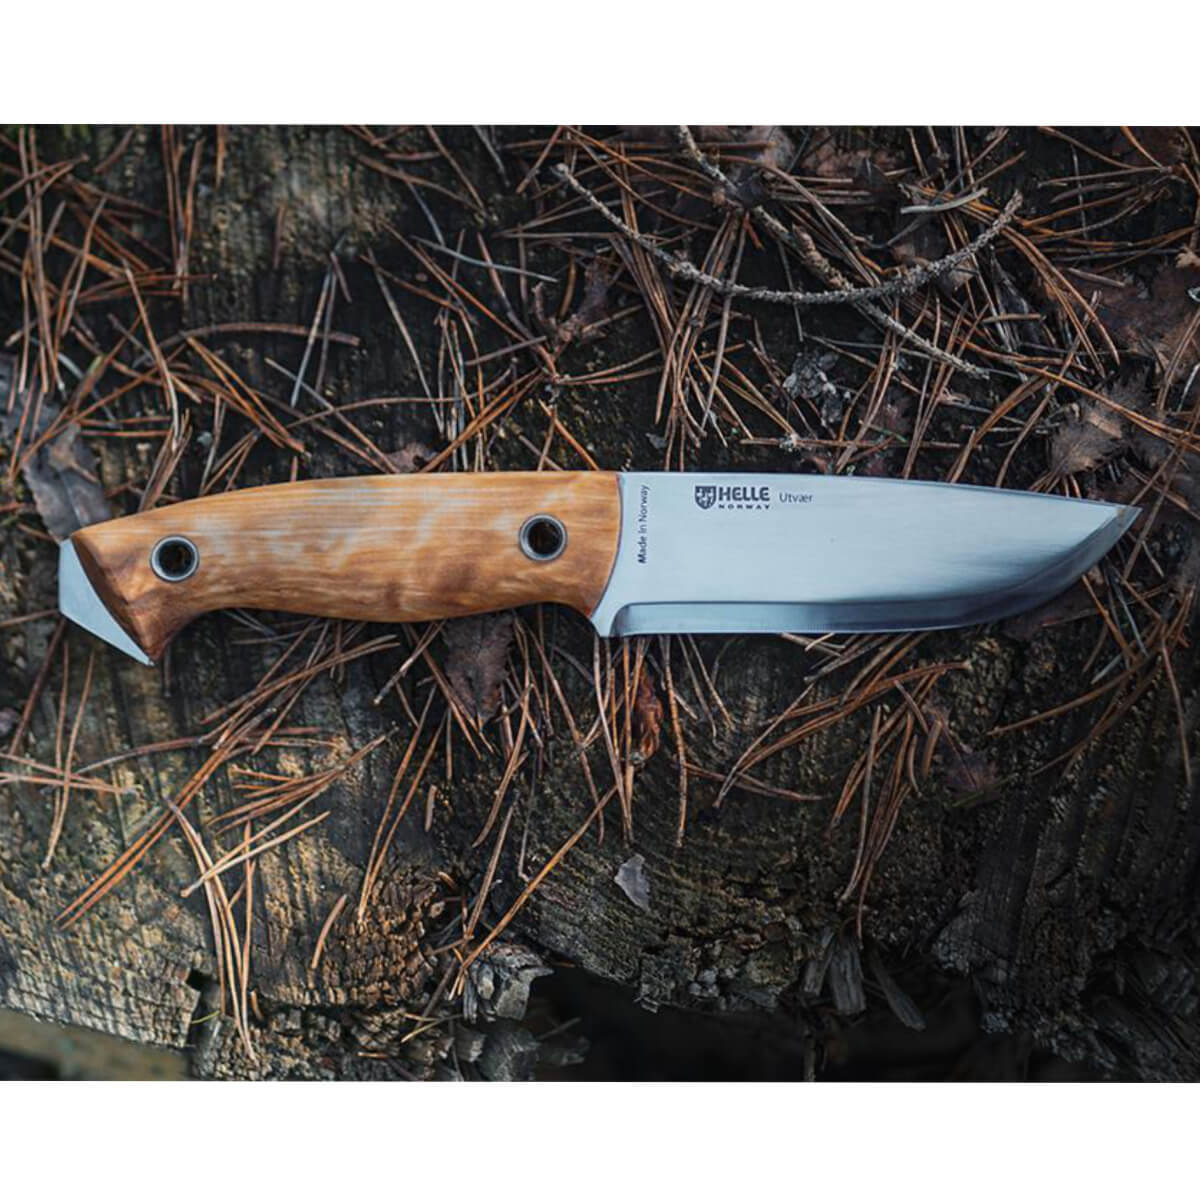 Helle Utvaer Bushcraft Knife